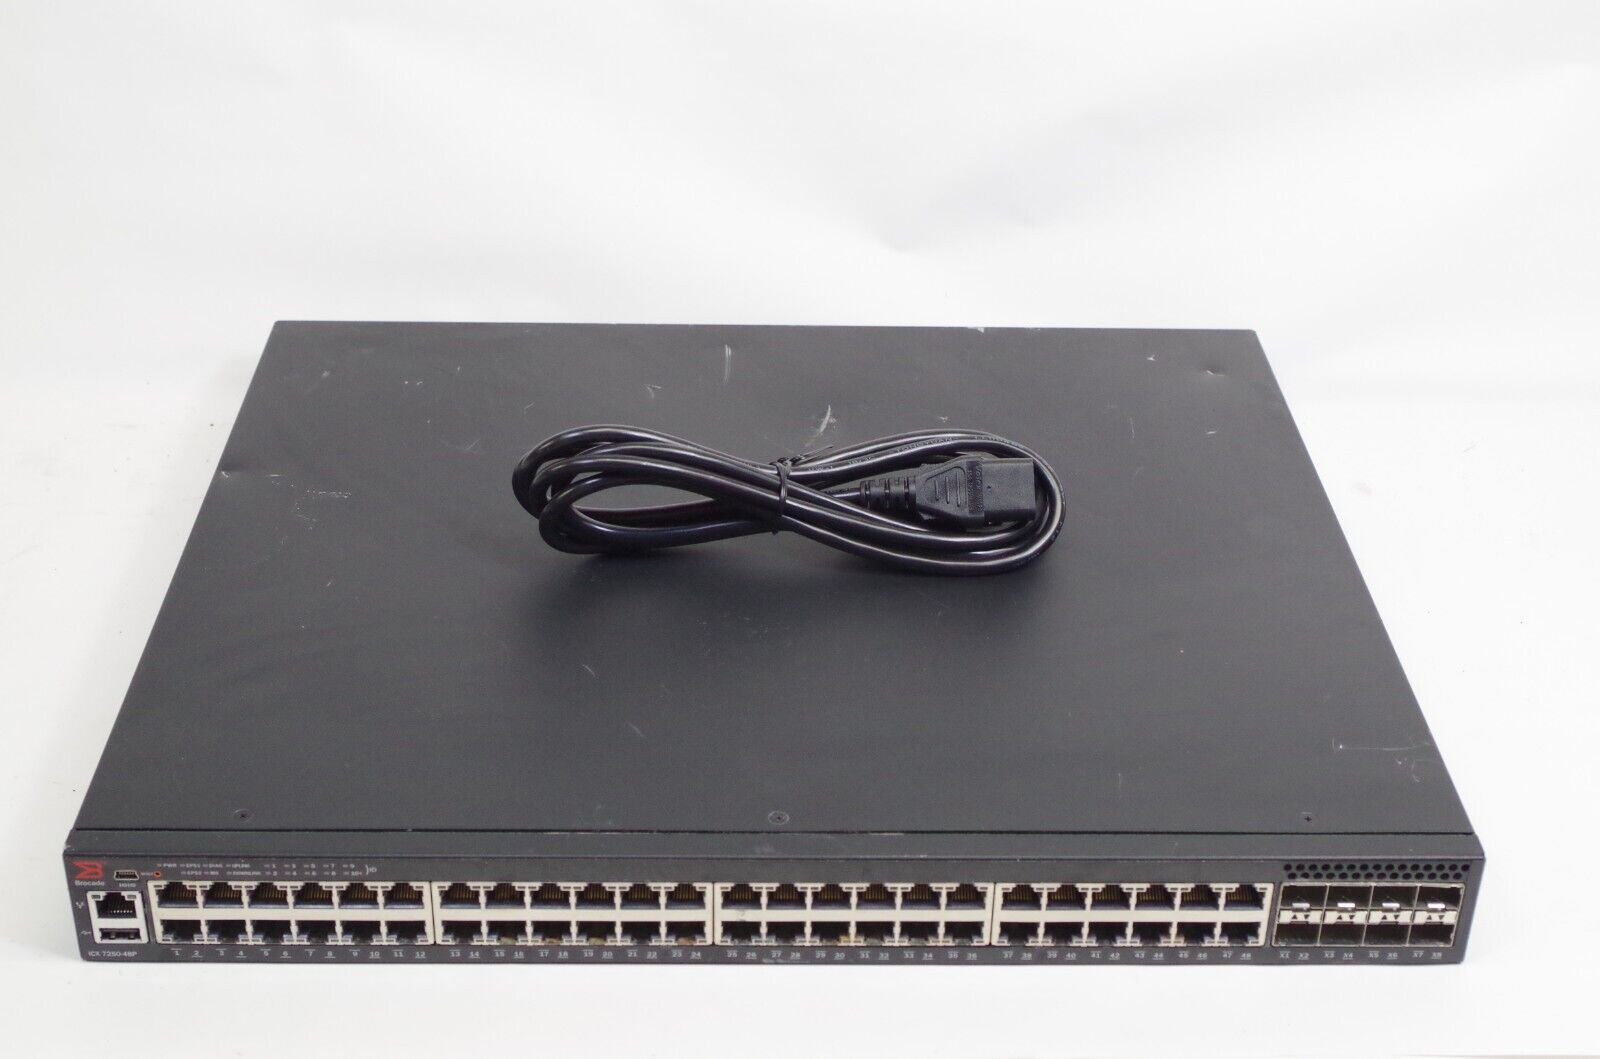 Brocade ICX 7250 48-Port PoE 8x1/10 GbE Ethernet Switch (ICX7250-48P-2X10G)